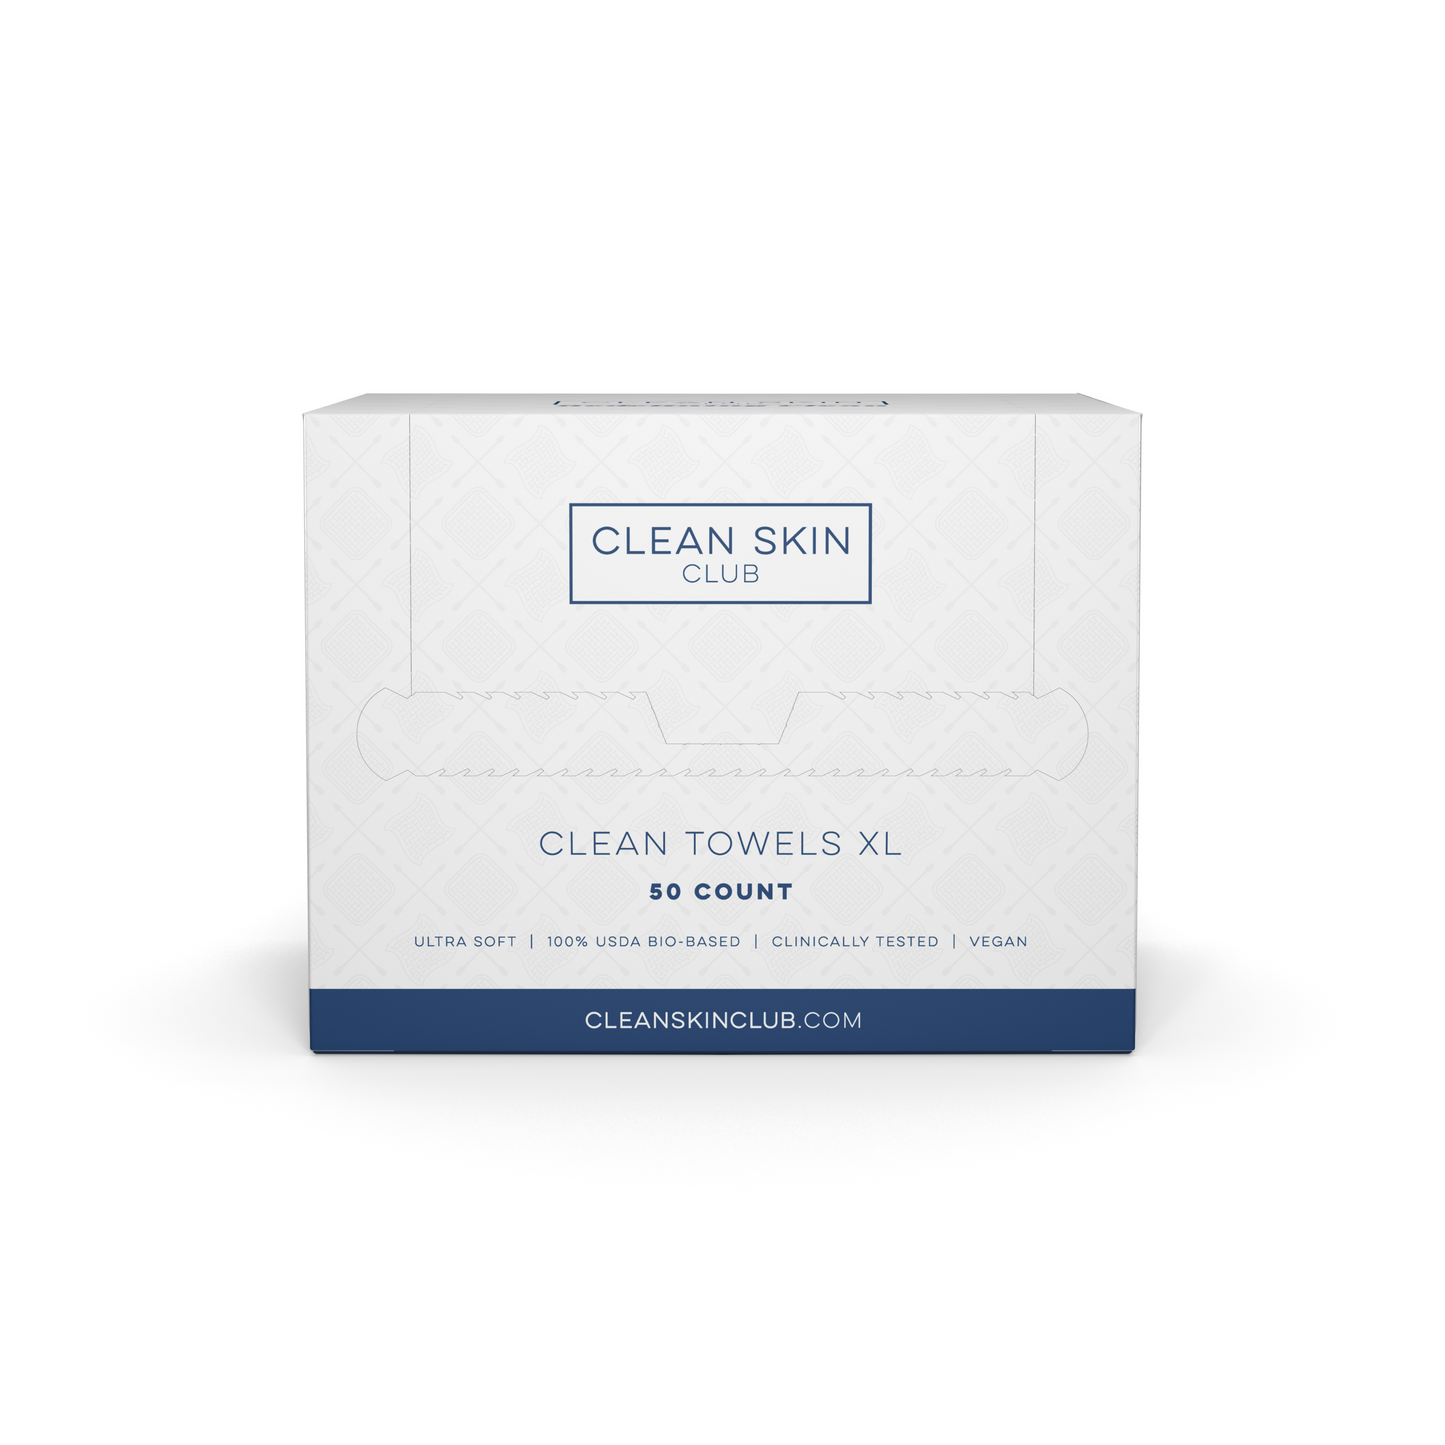 Clean Towels XL Original Offer